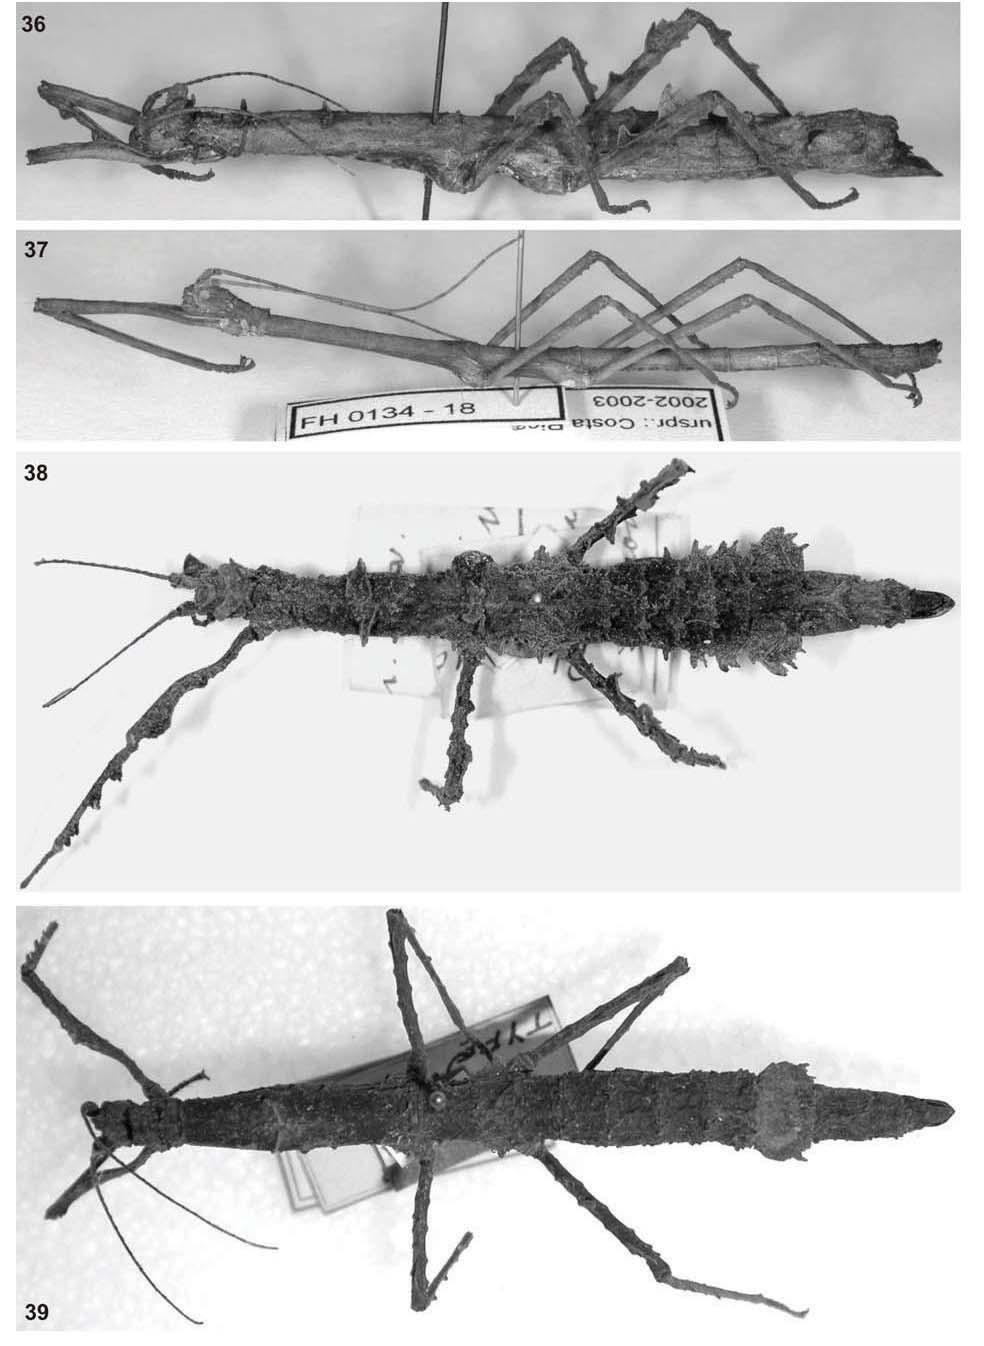 76 F.H. HENNEMANN AND O.V. CONLE Figs 36-39. Rhynchacris spp. 36. R. ornata Redtenbacher, 1908 from Costa Rica (coll. FH, No. 0134-1). 37. R. ornata Redtenbacher, 1908 from Costa Rica (coll. FH, No. 0134-18).